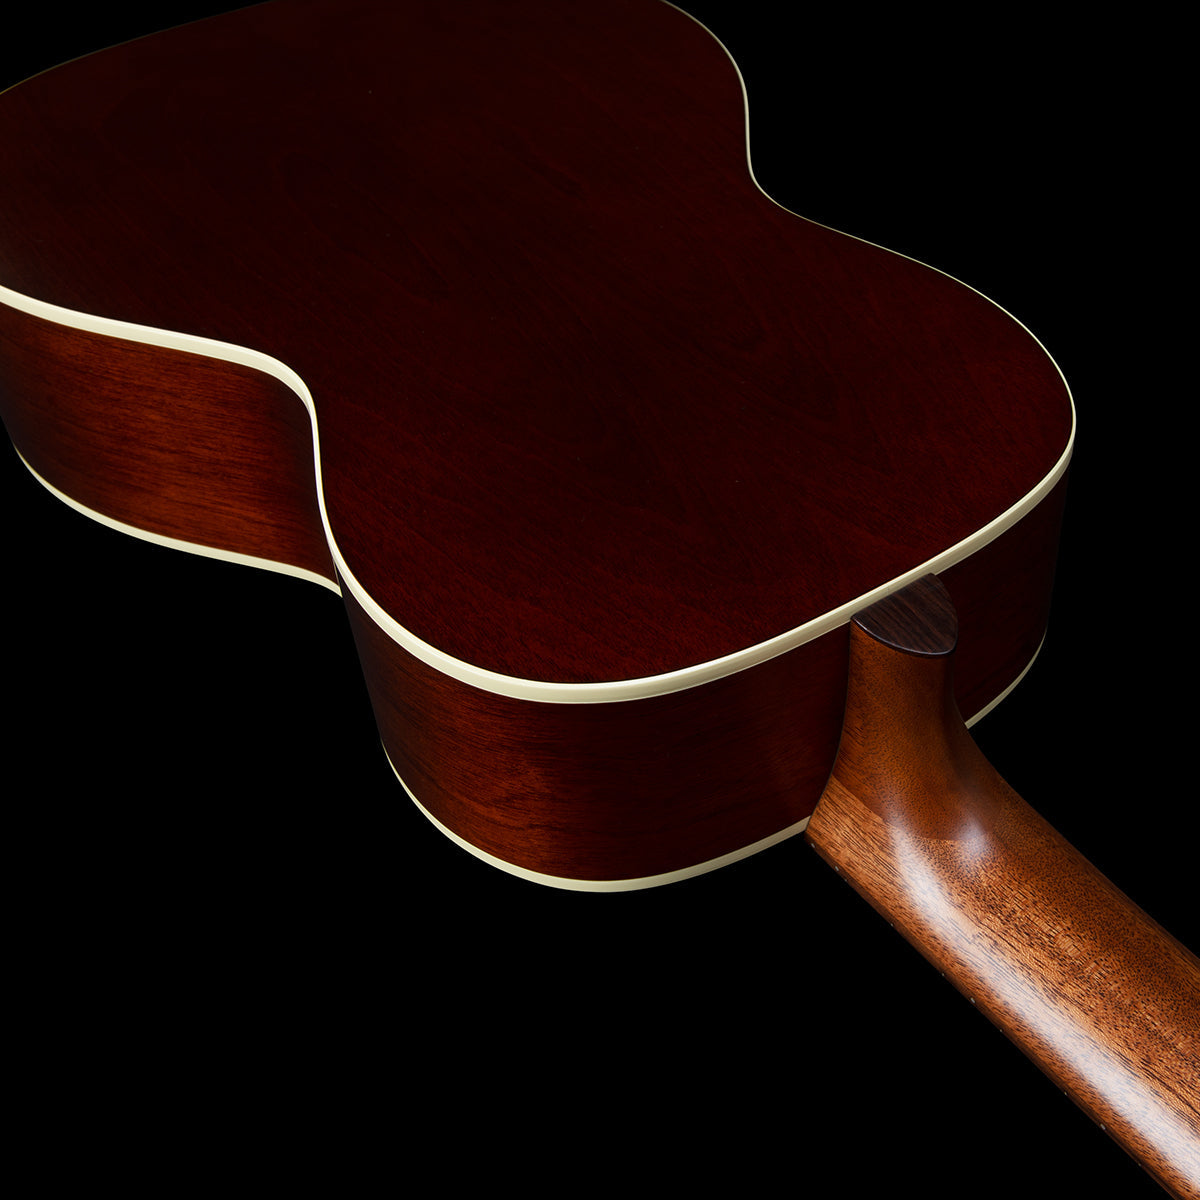 Godin Motif Clasica II Nylon String Electro Guitar,  for sale at Richards Guitars.